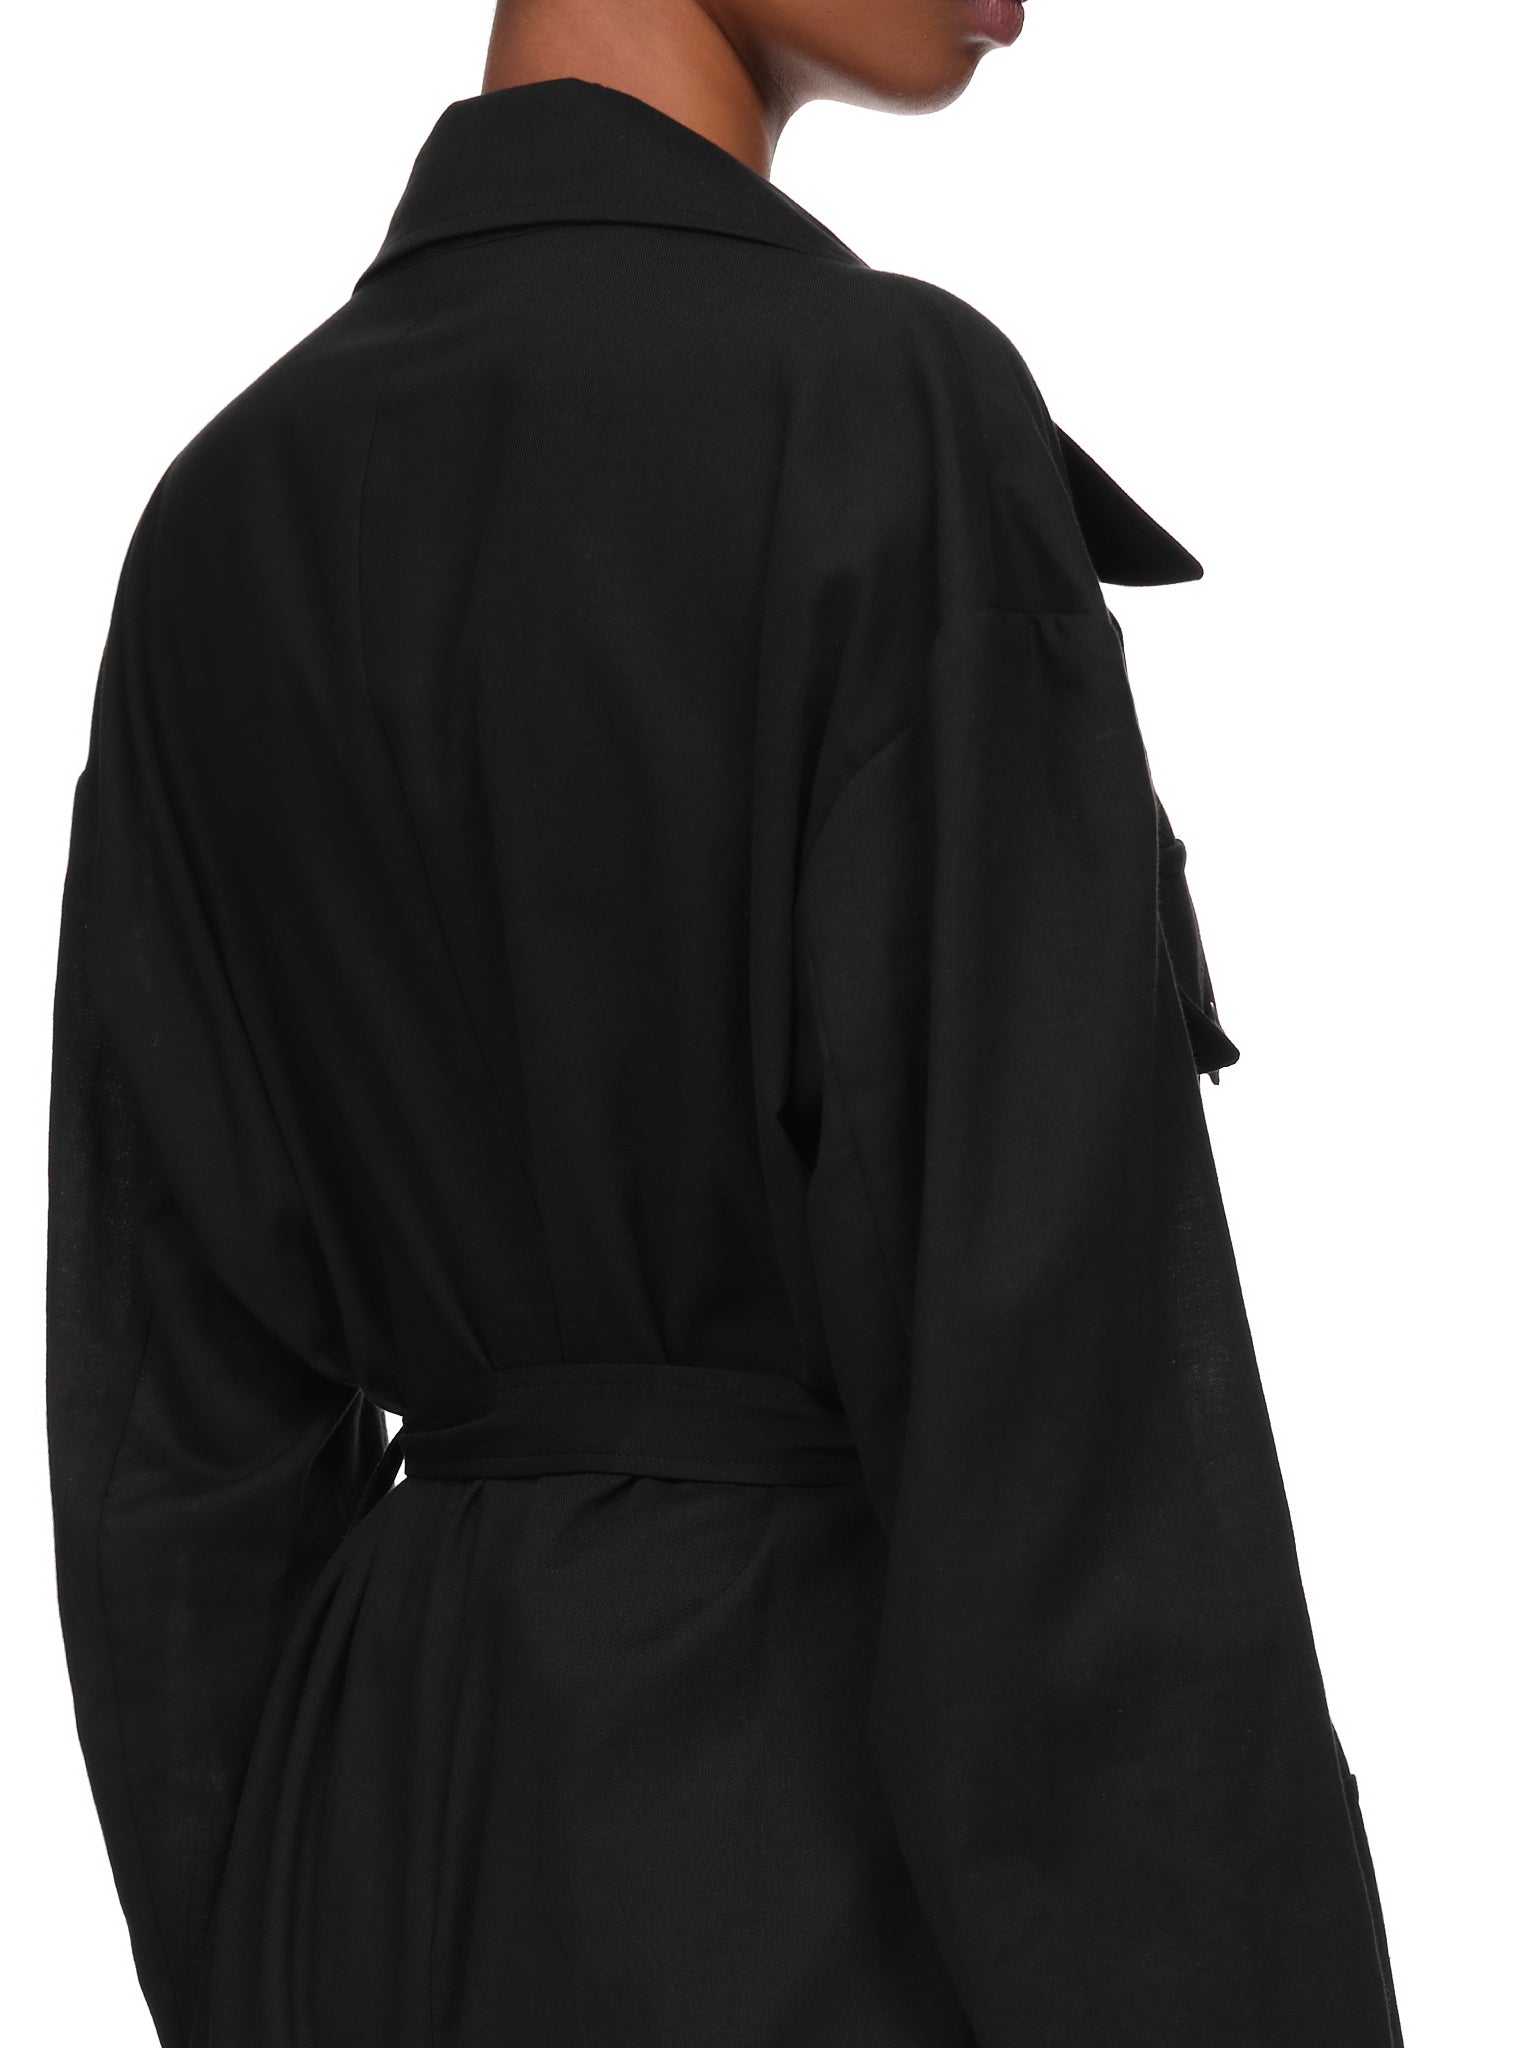 Black Coat (YG-J03-011-BLACK)